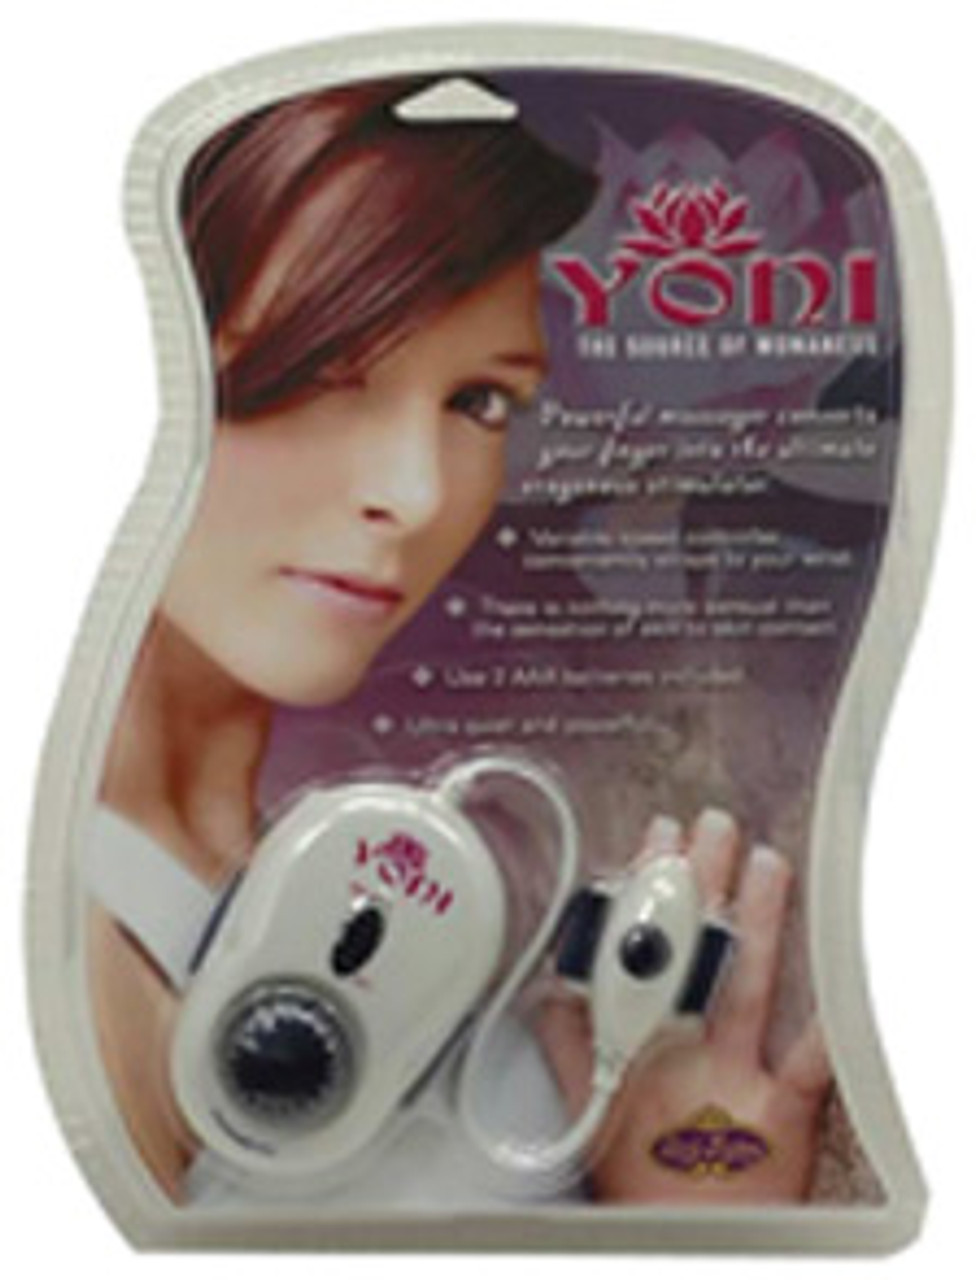 Yoni Multi Speed Massager Dallas Novelty